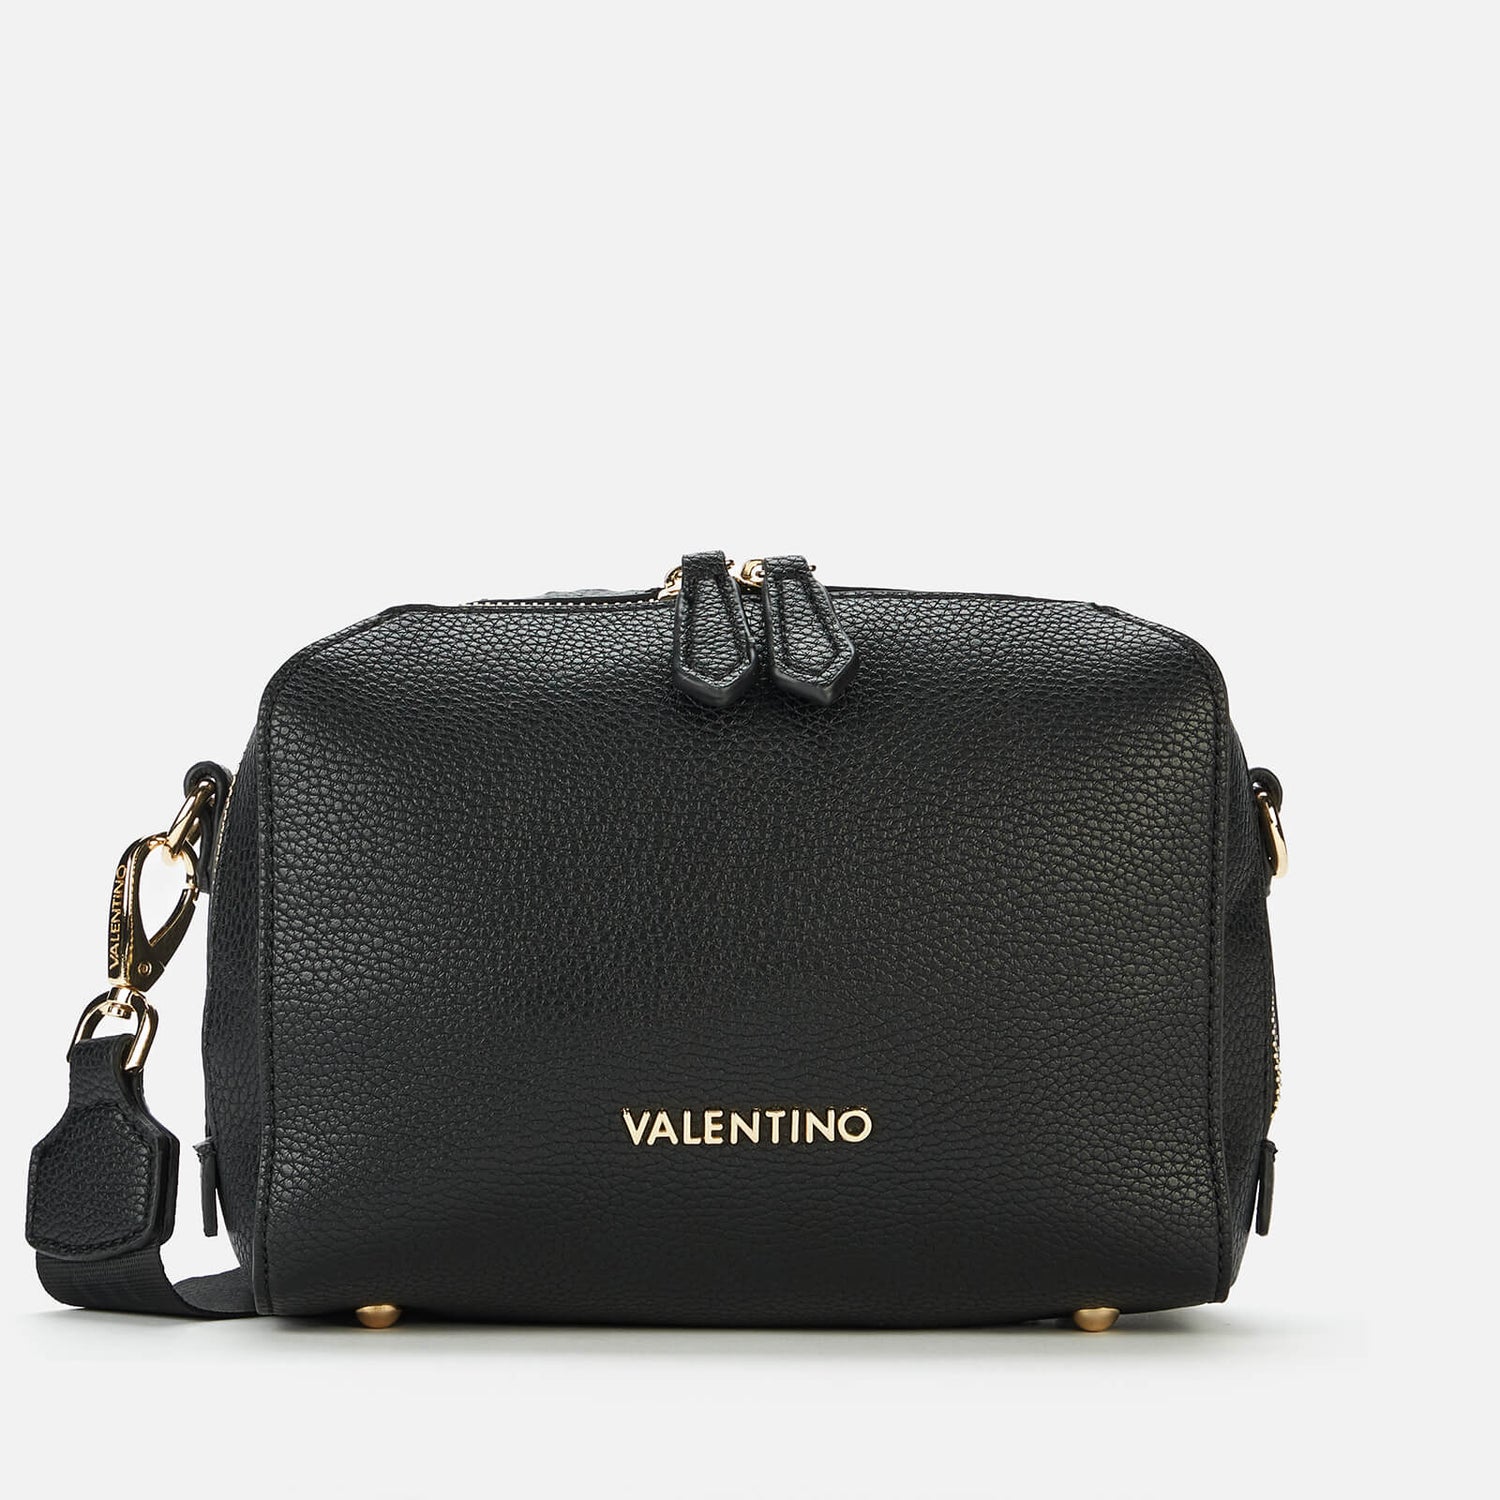 Valentino Women's Pattie Cross Body Bag - Black | TheHut.com